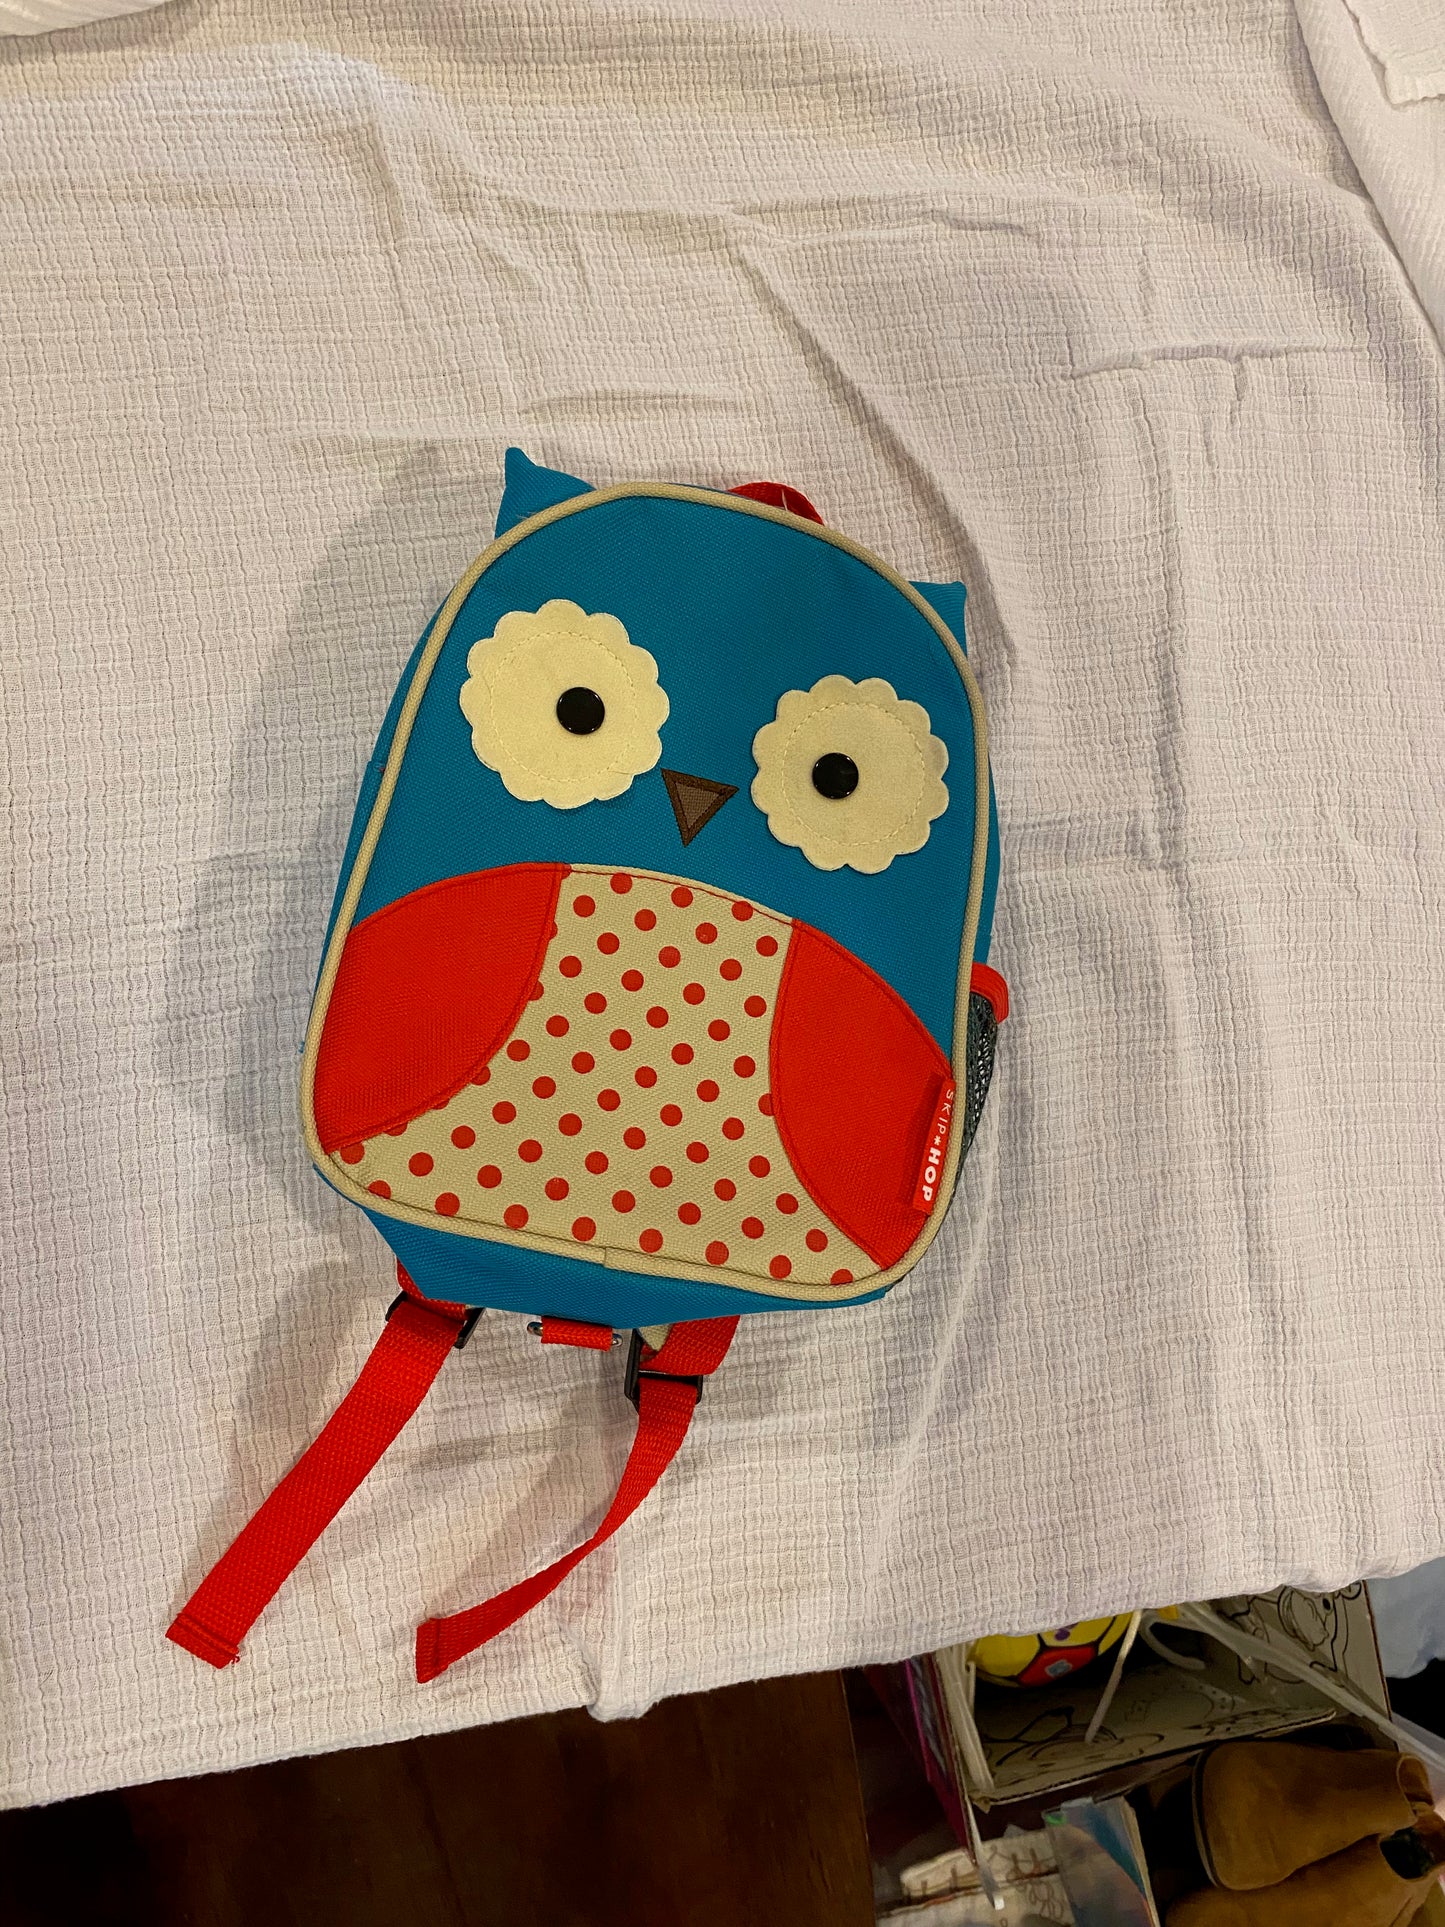 Skip Hop Owl Preschool Backpack